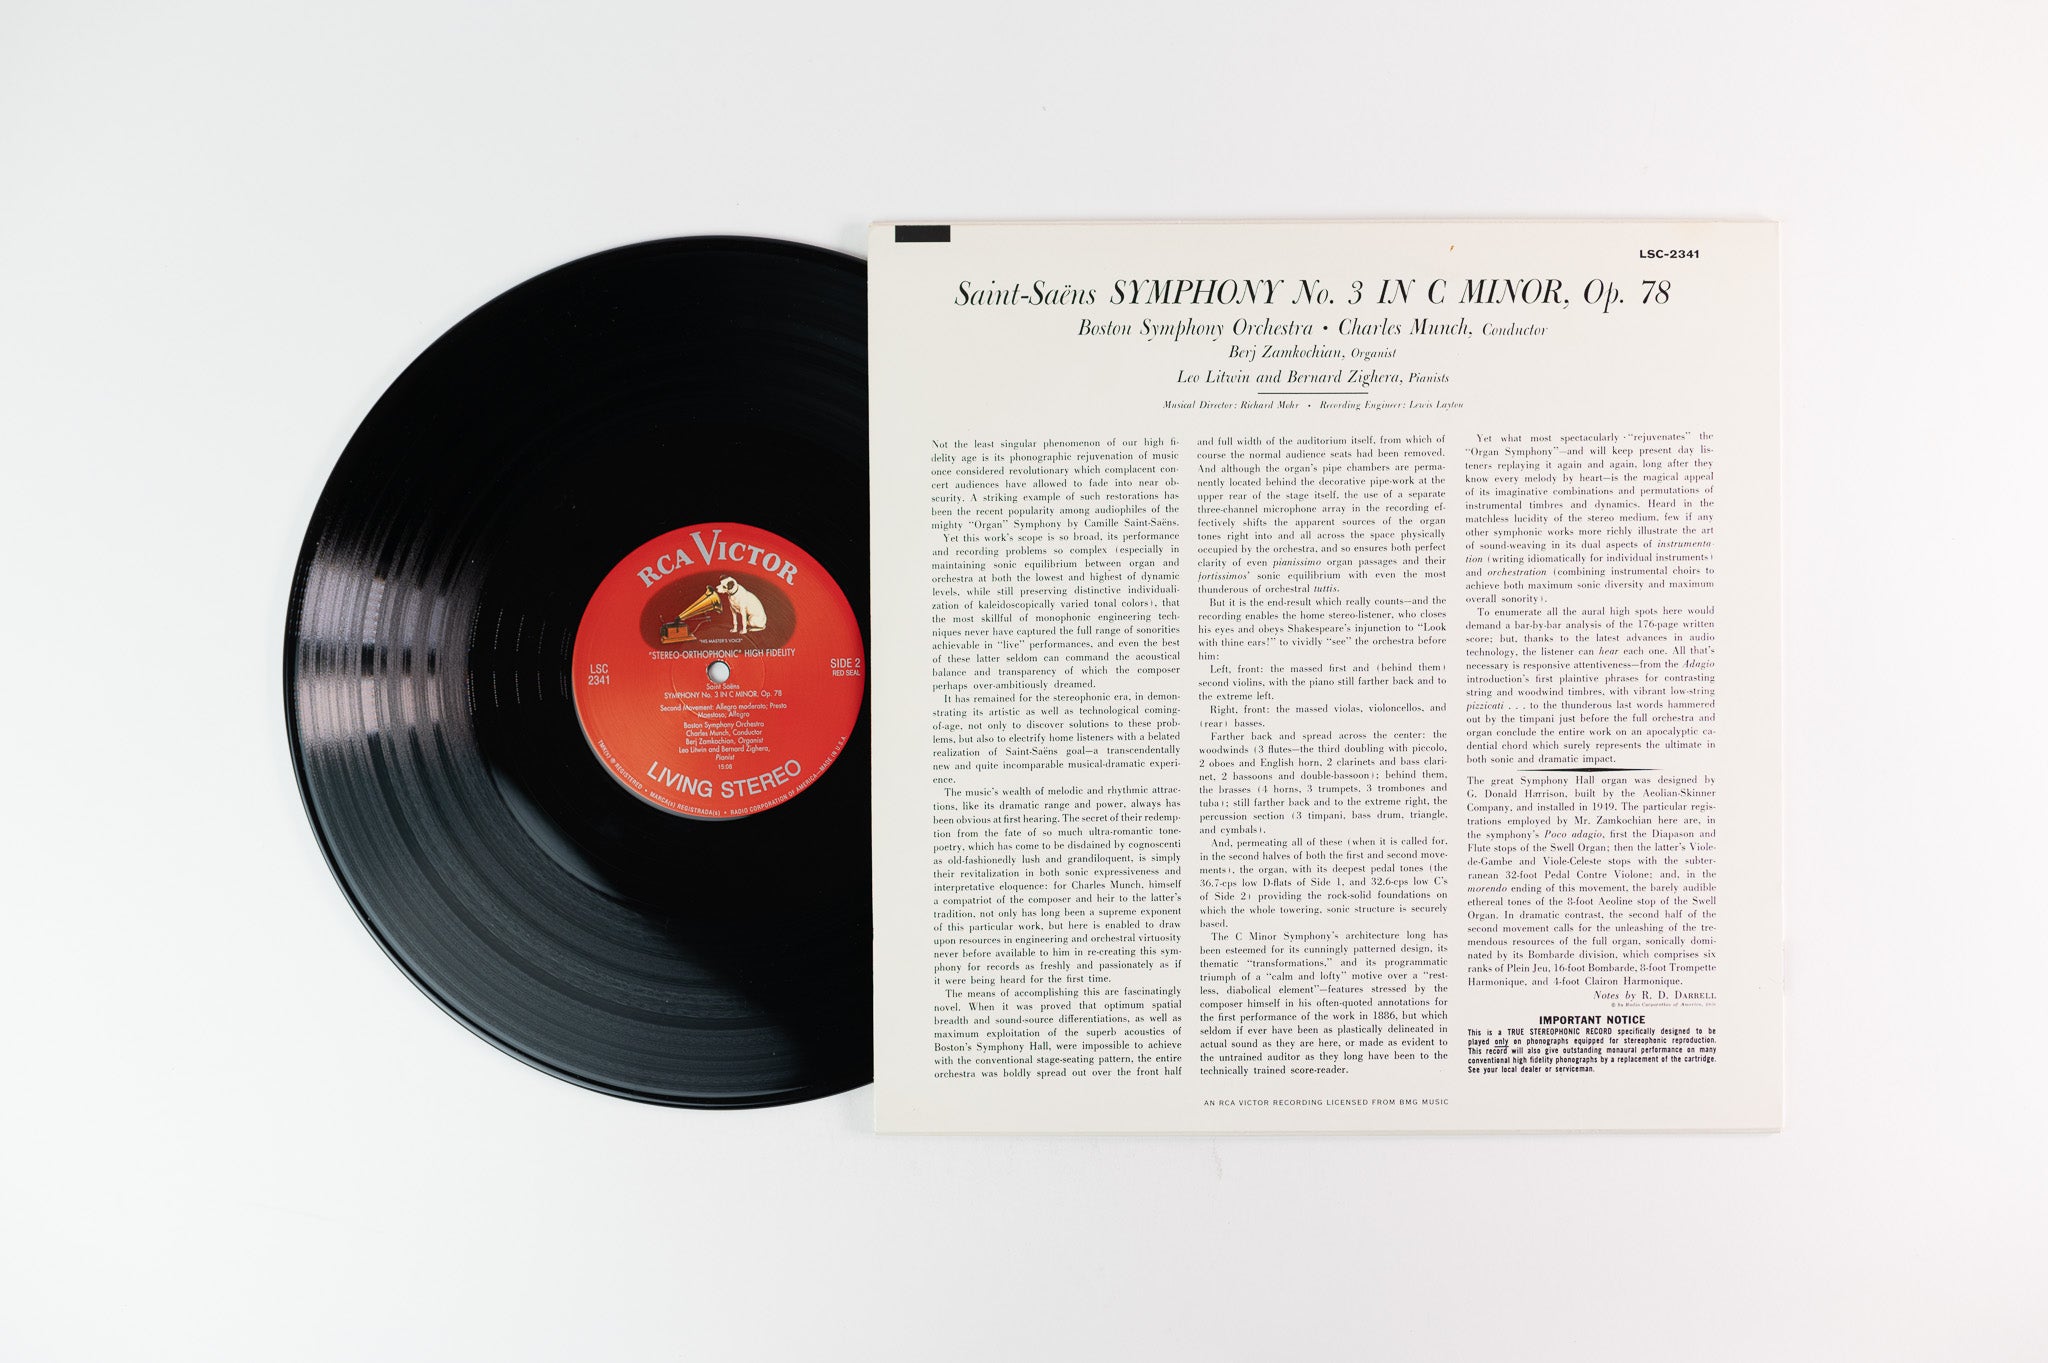 Munch & Boston Symphony -Saint-Saëns -(Symphony No. 3) on RCA Classic Records Reissue